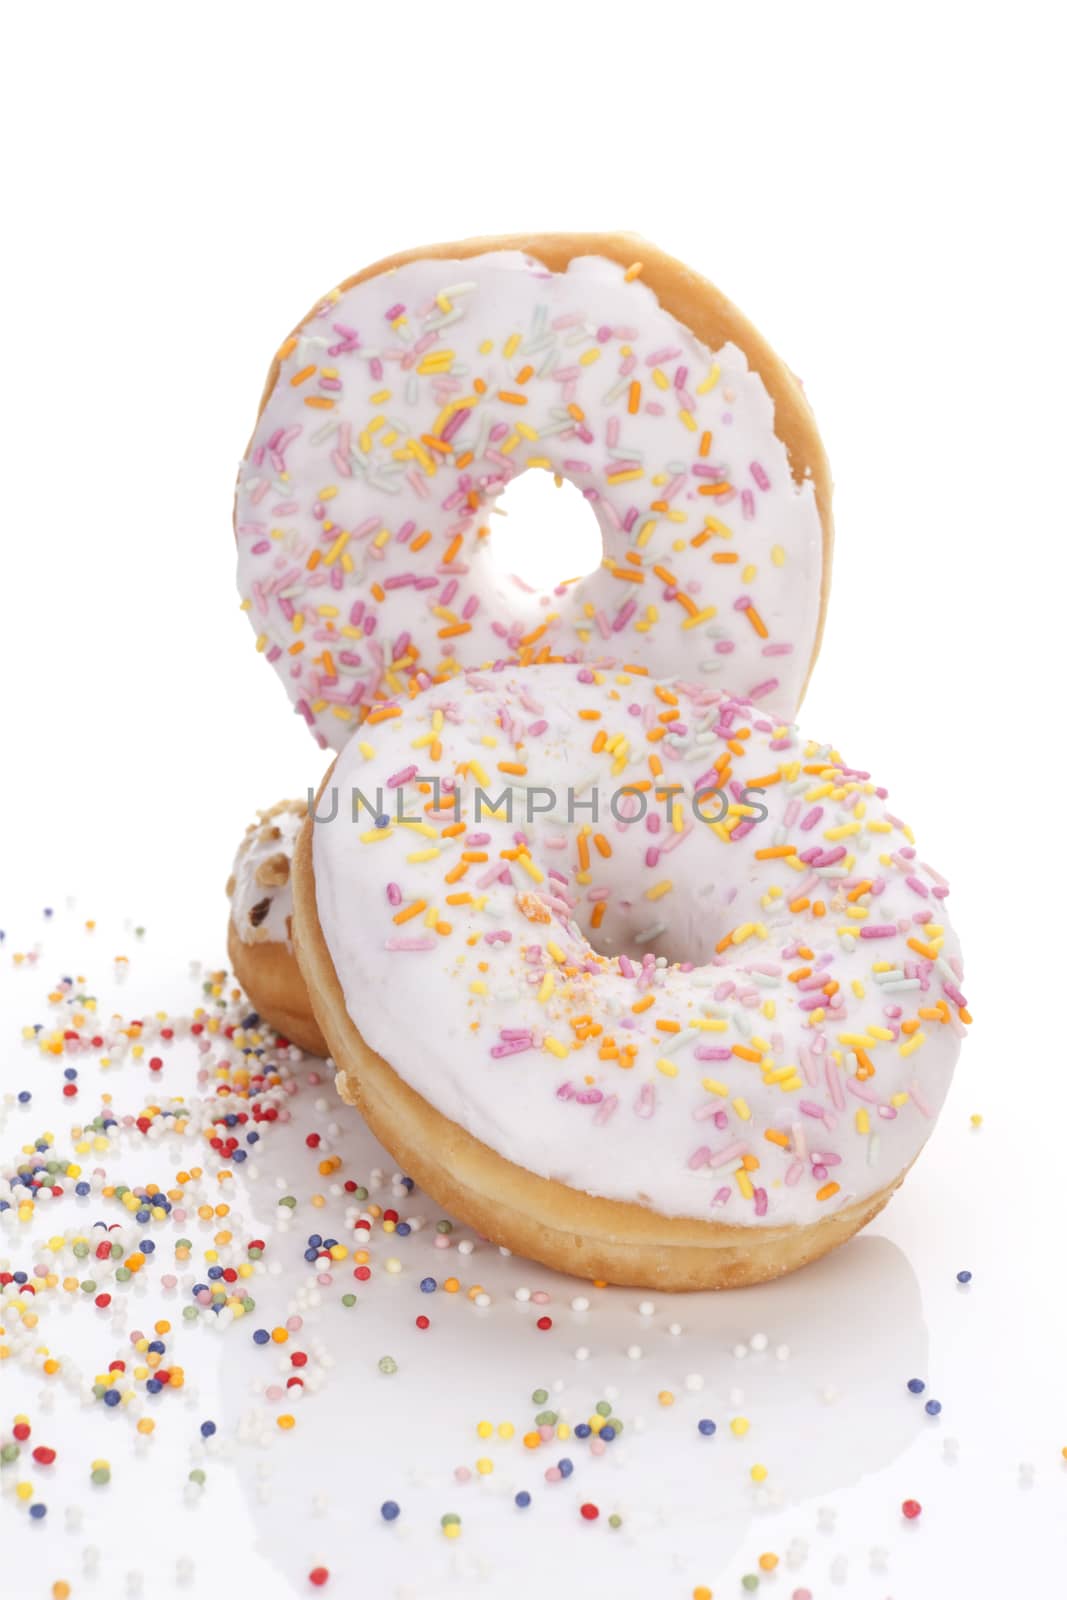 Delicious colorful donuts. American breakfast concept.